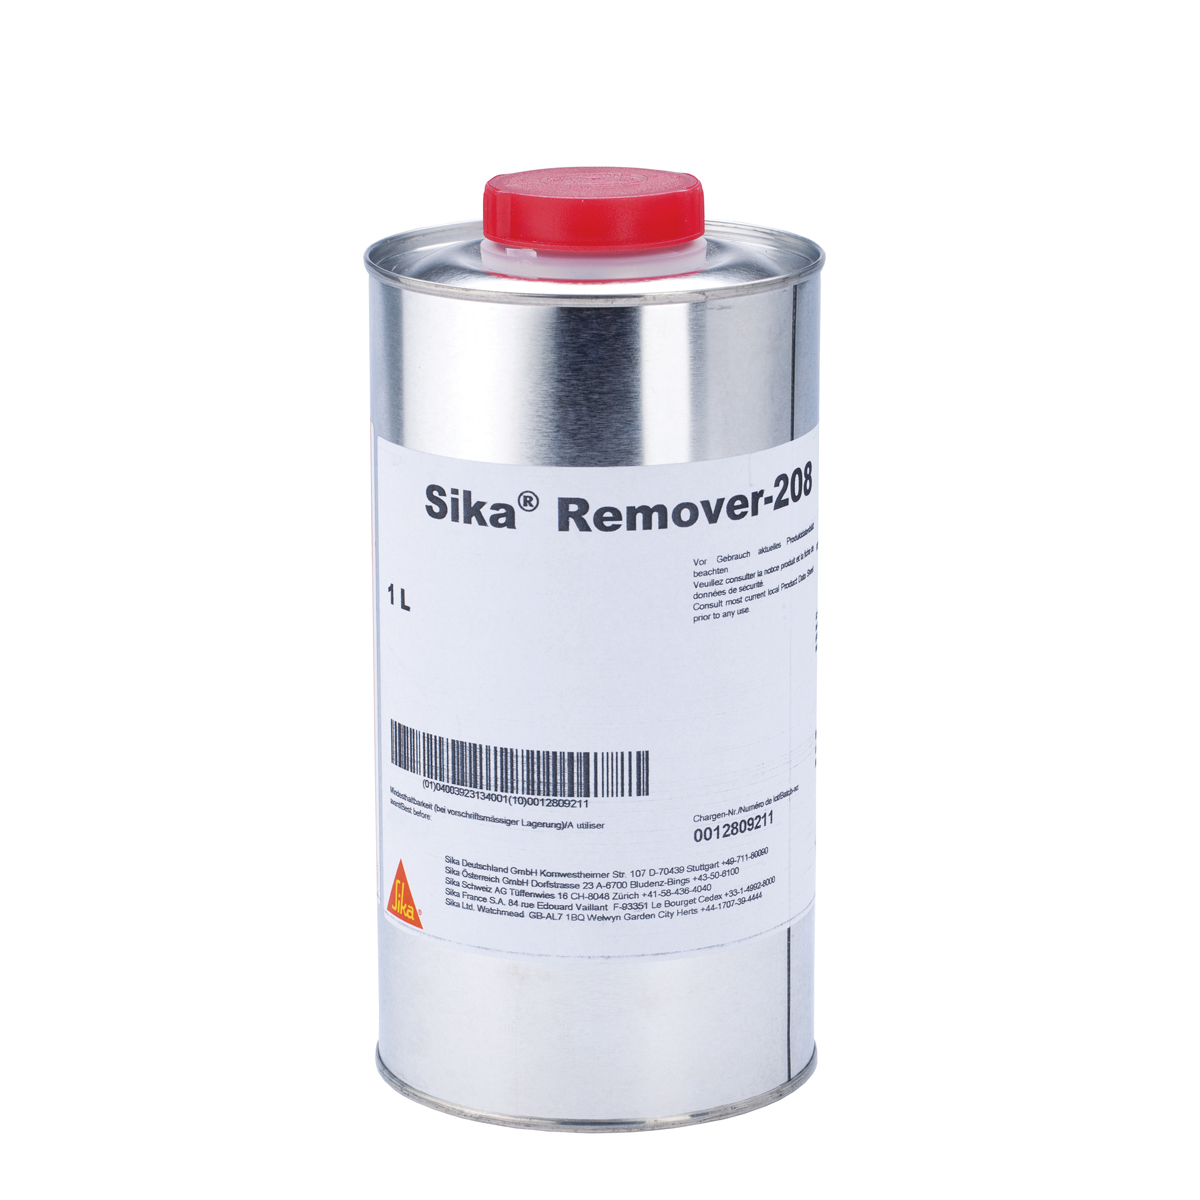 Sika® Remover 208, Γενικο Καθαριστικο, 1000Ml (συσκευσία 4 τμχ)